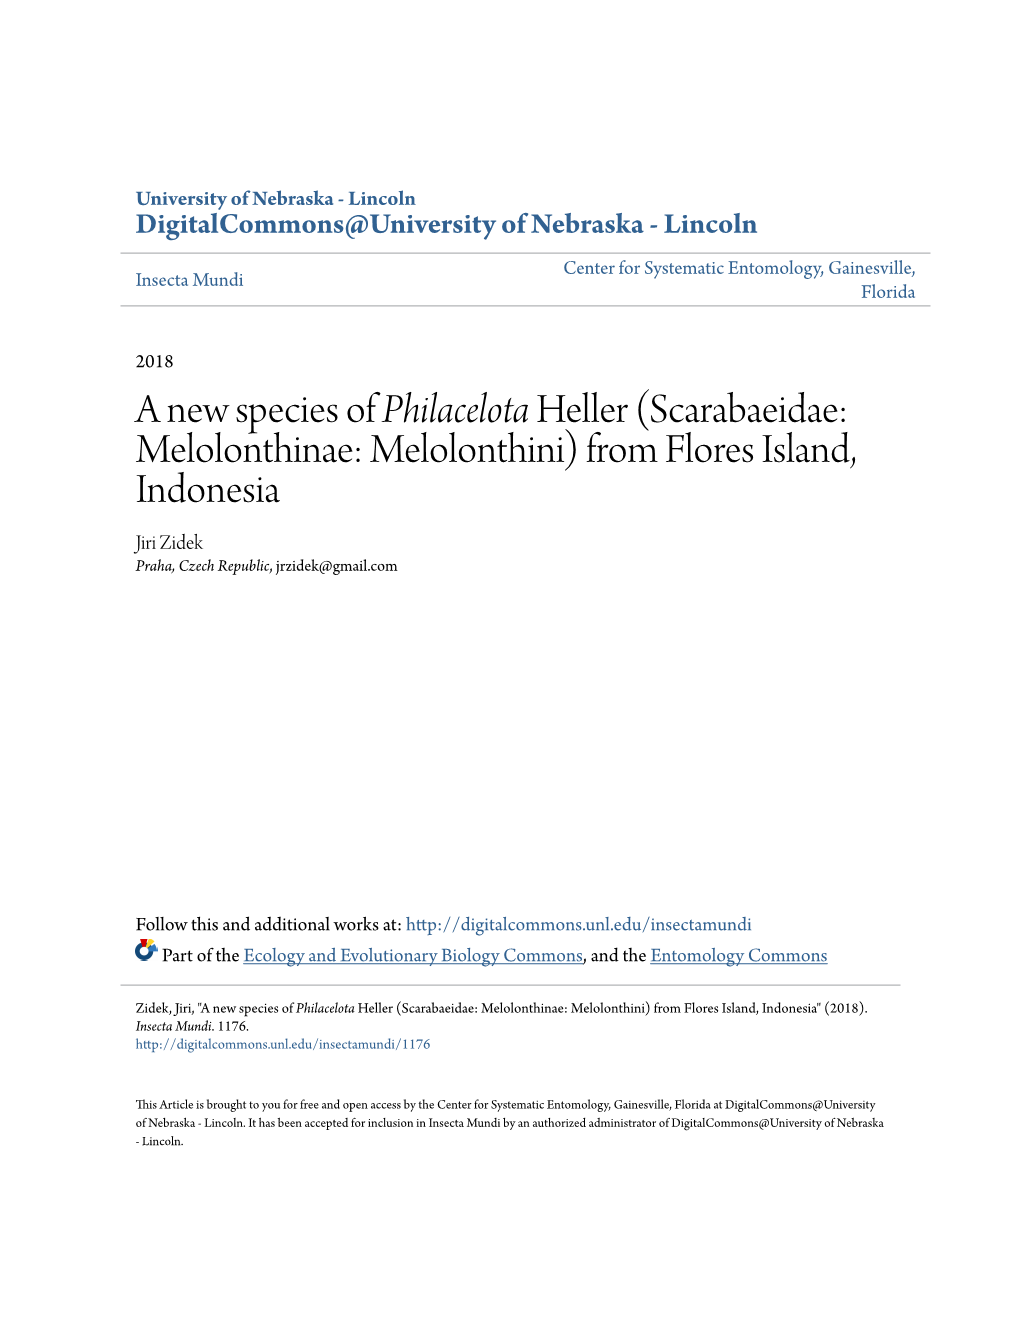 Scarabaeidae: Melolonthinae: Melolonthini) from Flores Island, Indonesia Jiri Zidek Praha, Czech Republic, Jrzidek@Gmail.Com